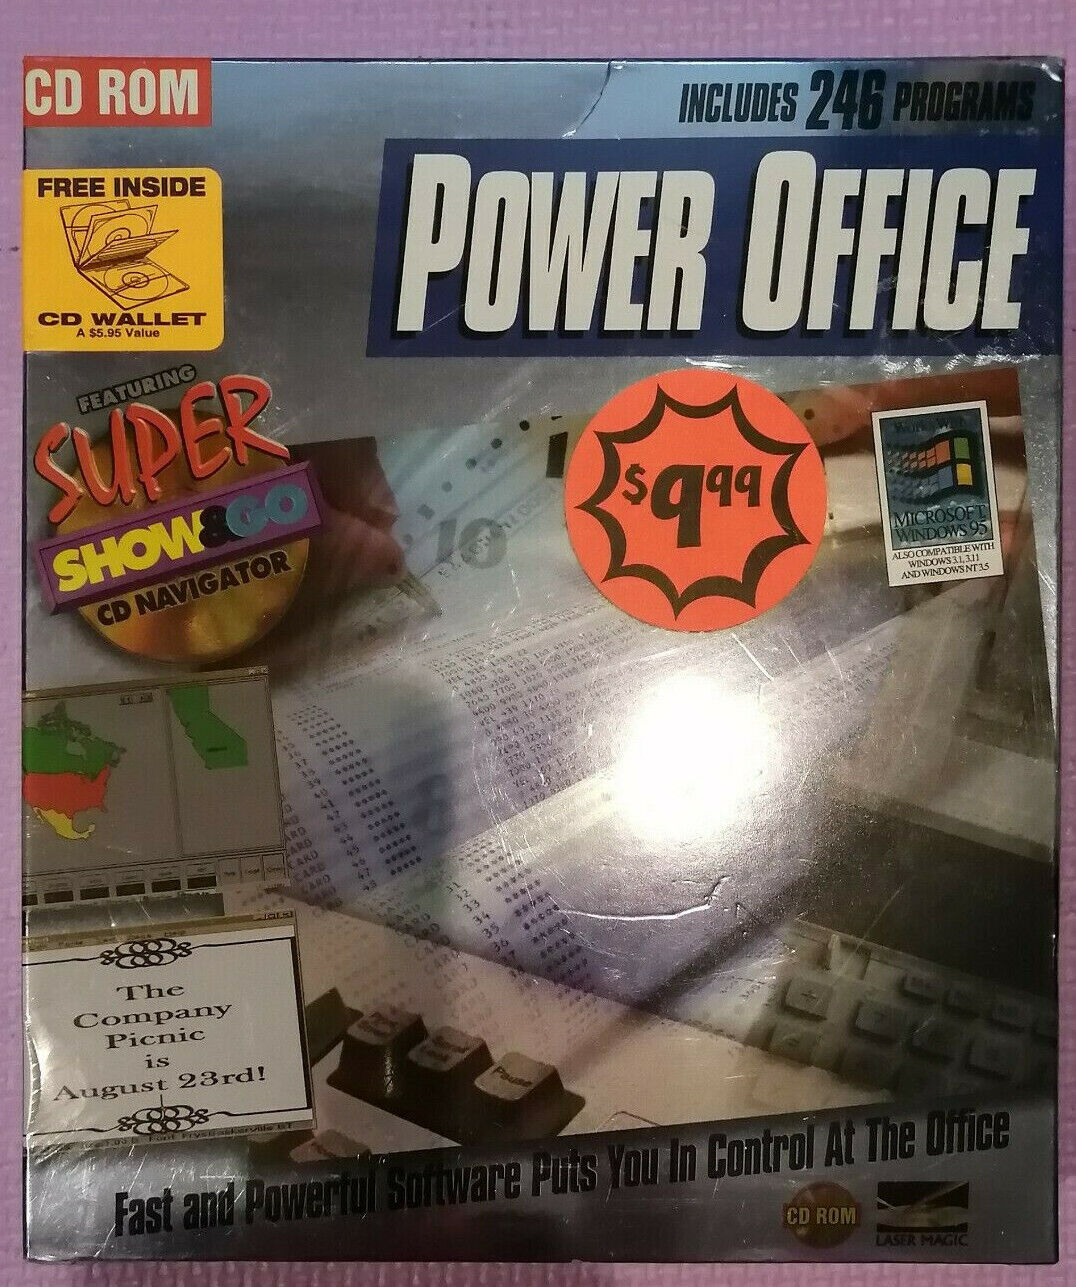 Vintage Power Office CD ROM Software Laser Magic 1995 Windows 95, 246 Programs